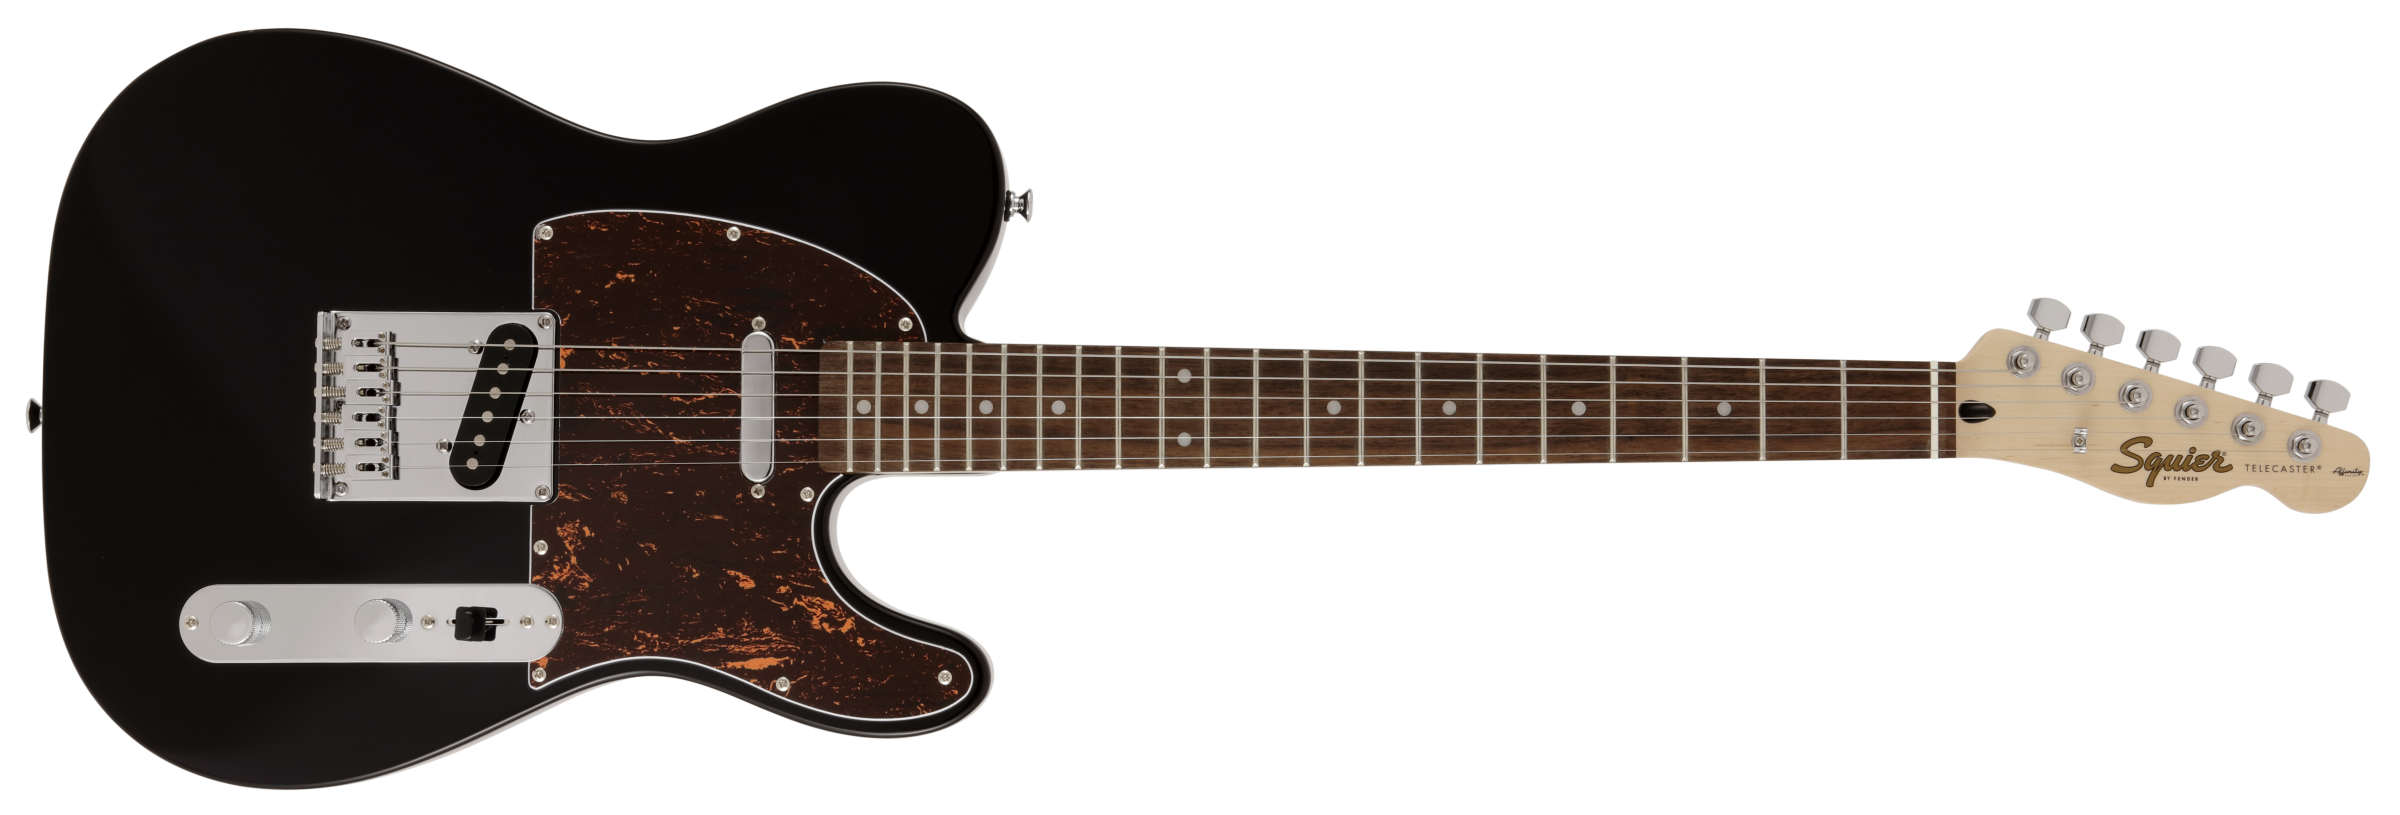 Fender Squier FSR AFFINITY TELECASTER elektriskā ģitāra - STANFORD